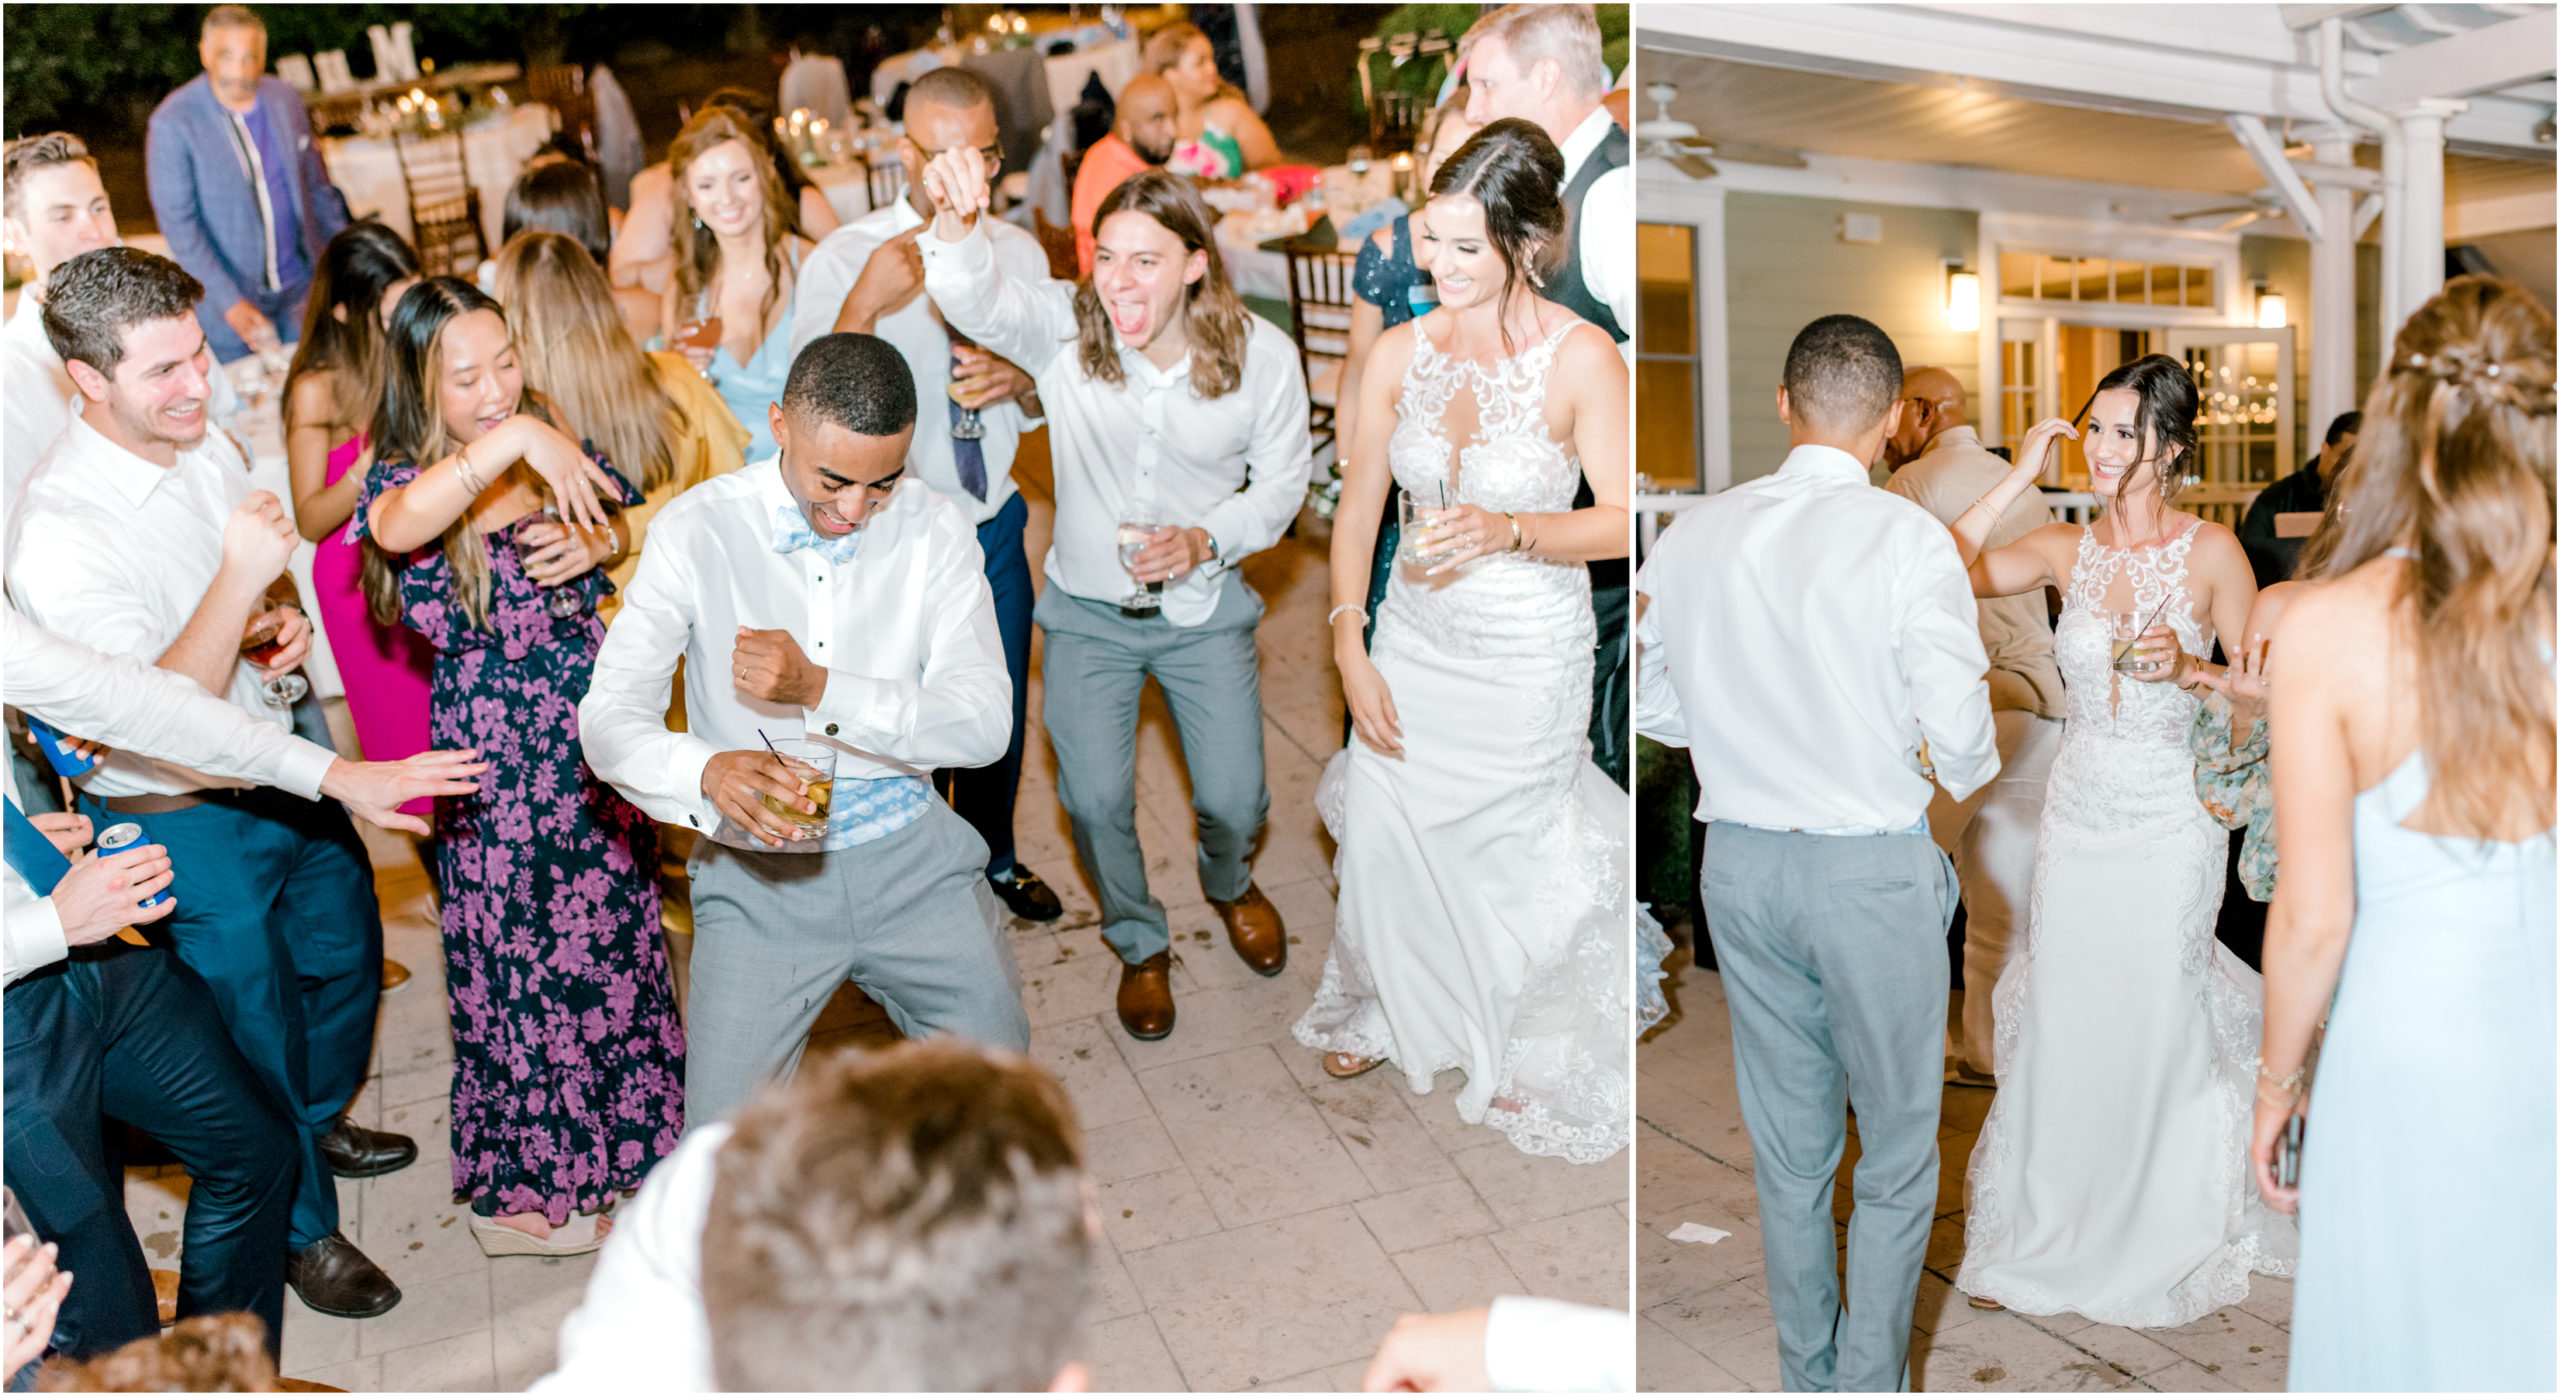 whitehead manor wedding reception dancing